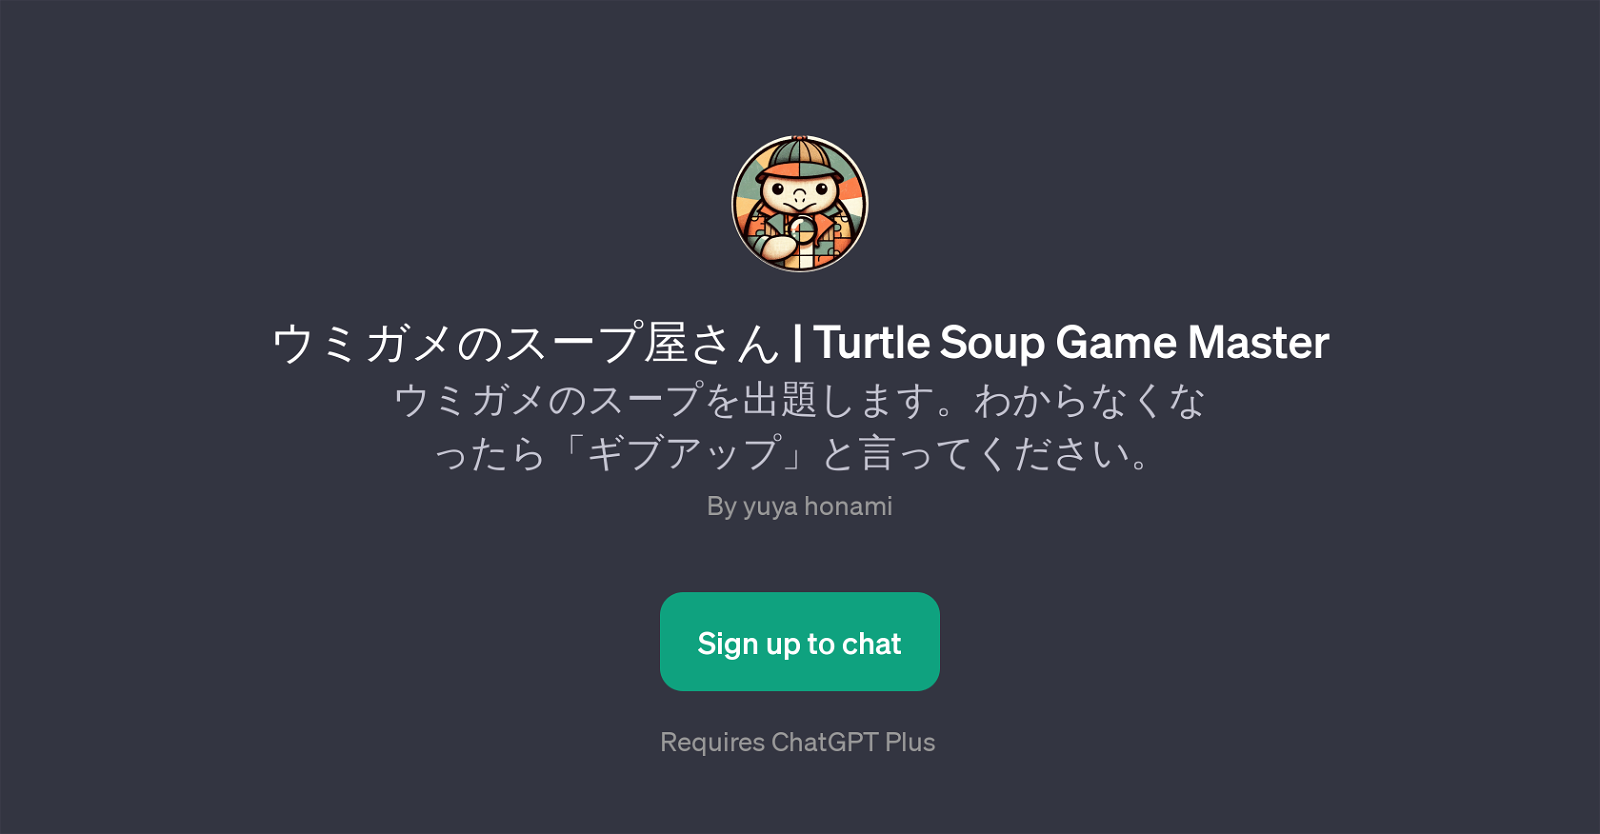 Turtle Soup Game Master website